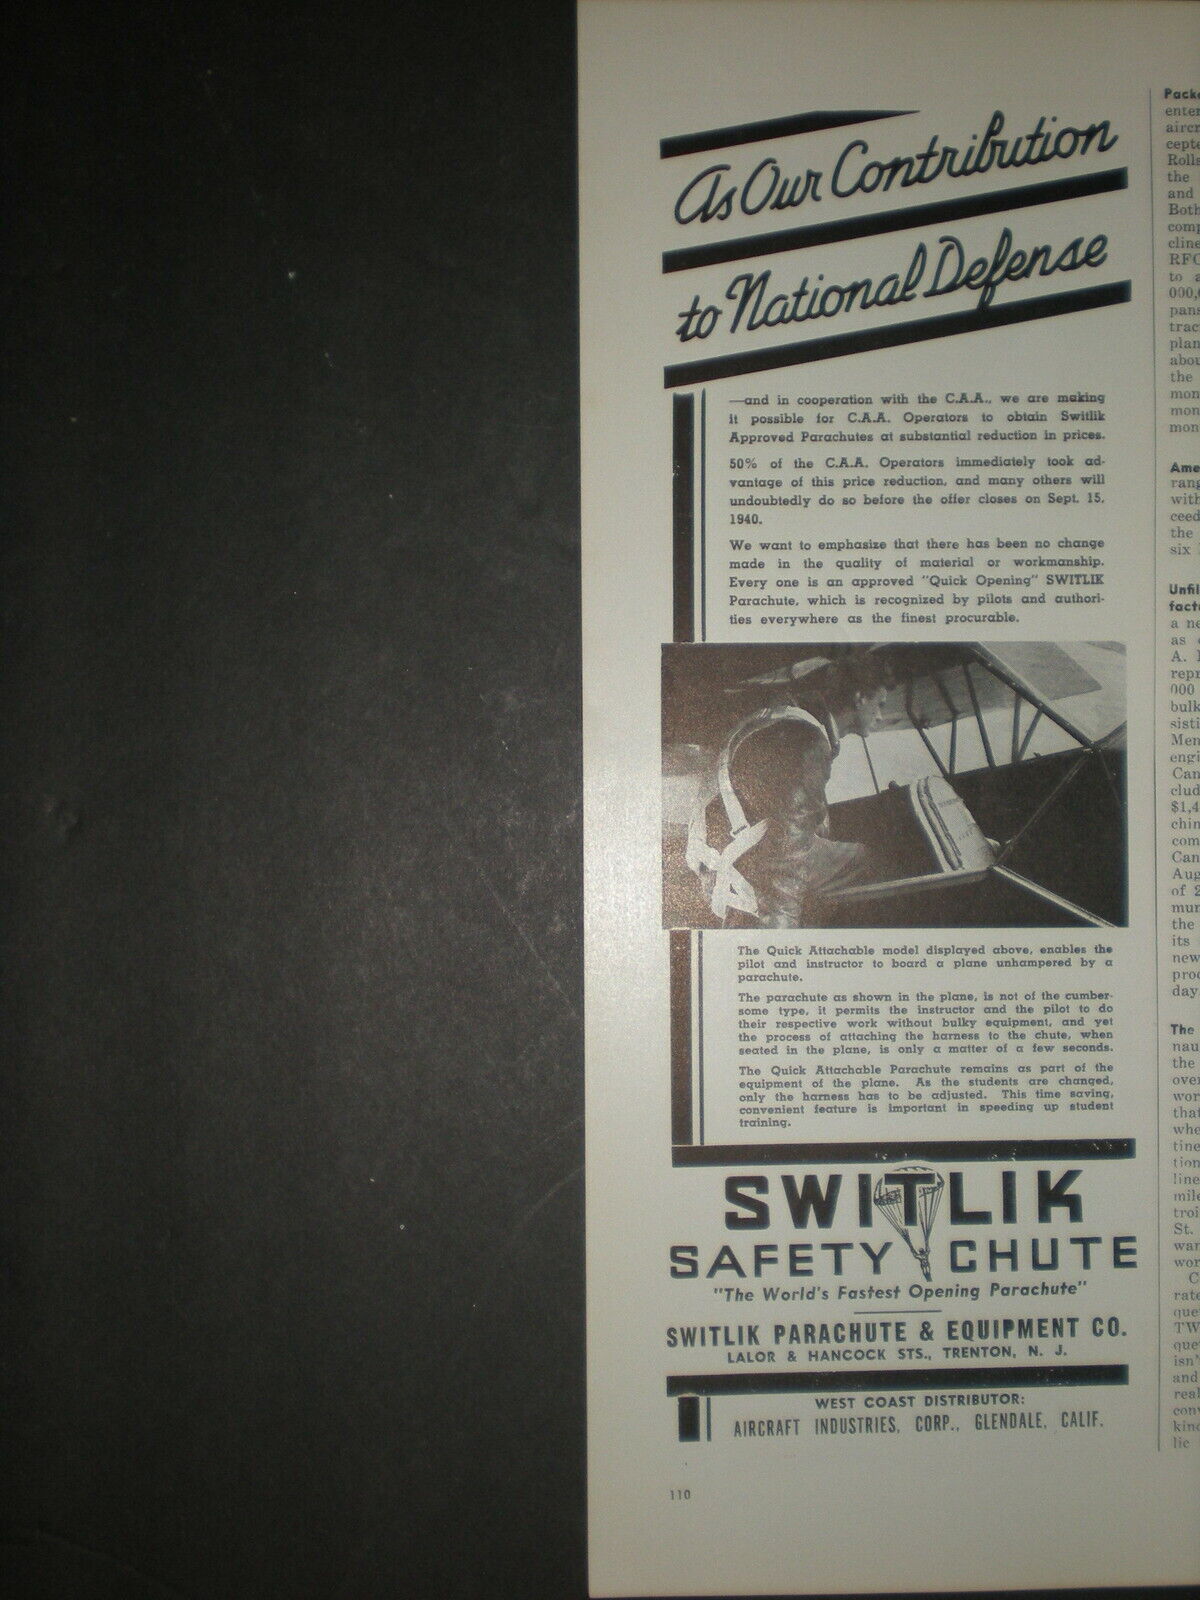 1940 NATIONAL DEFENSE CAA SWITLIK PARACHUTE WWII vintage Trade print ad